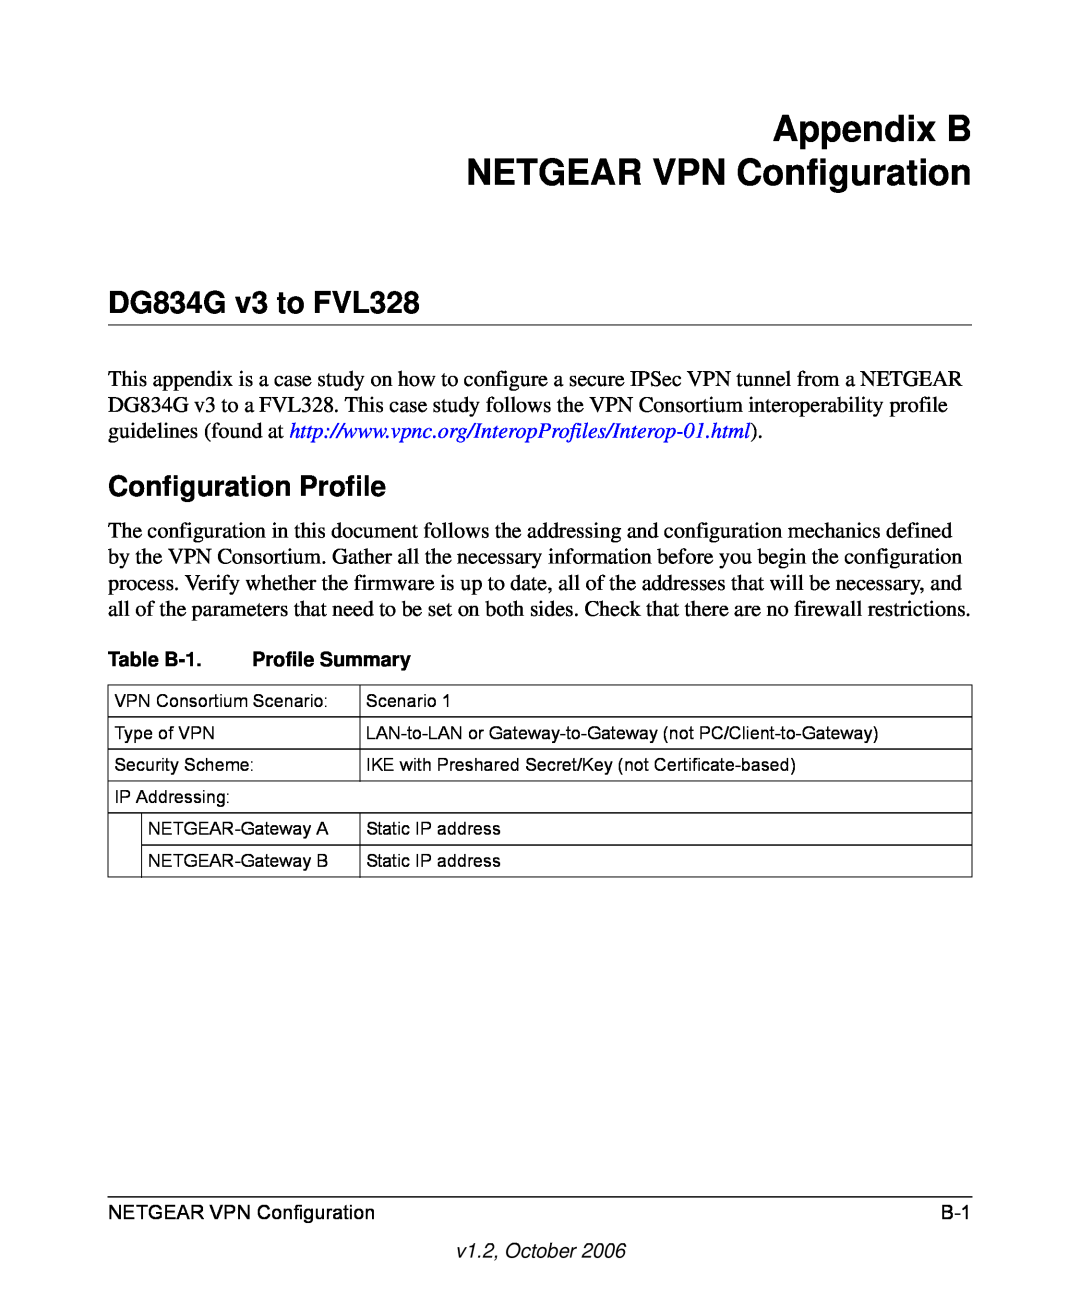 NETGEAR manual Appendix B NETGEAR VPN Configuration, DG834G v3 to FVL328, Configuration Profile 